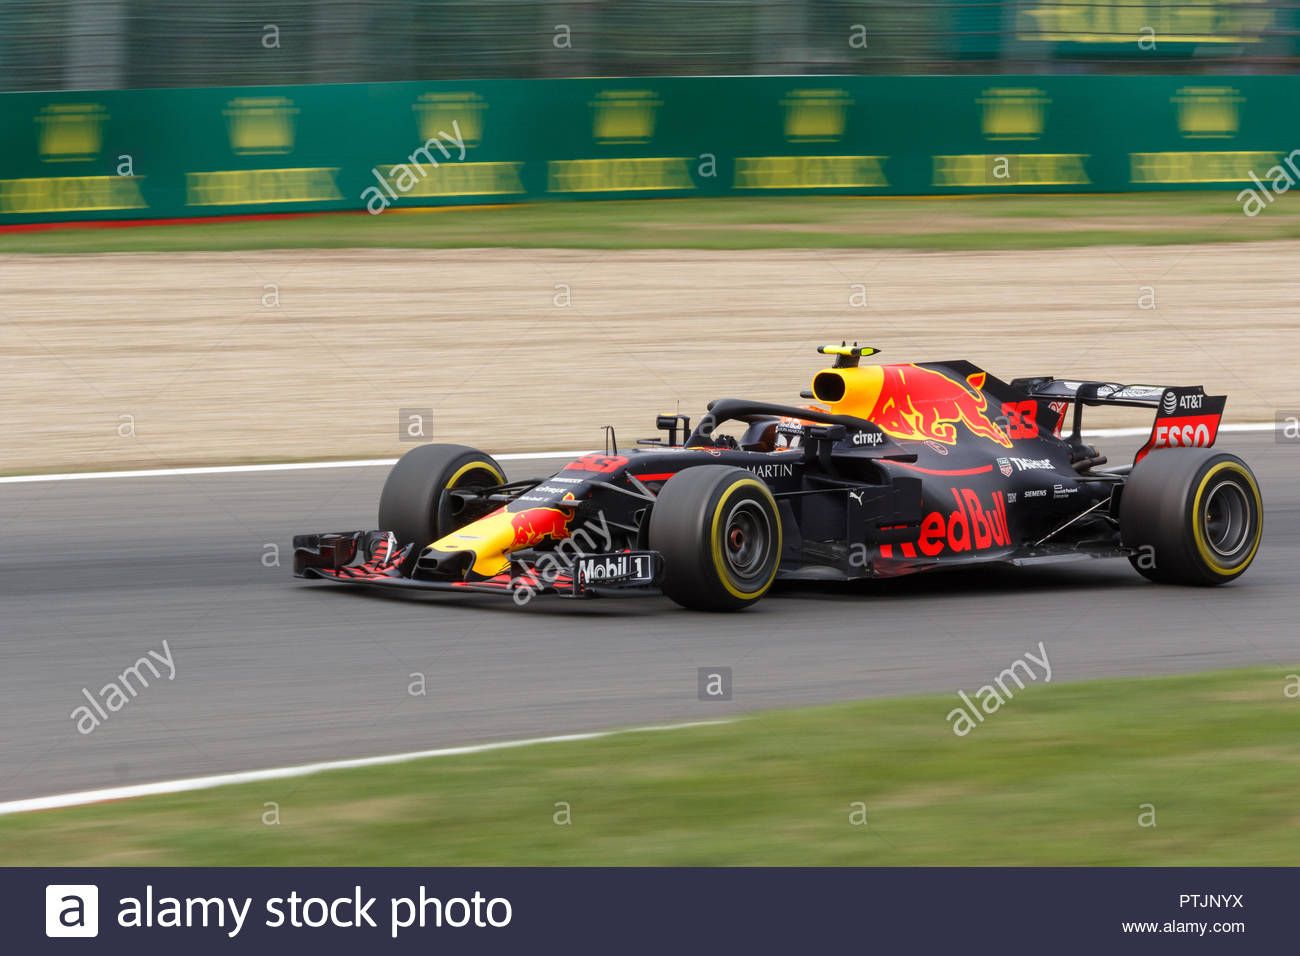 Max Verstappen 2018 Stock Photos & Max Verstappen 2018